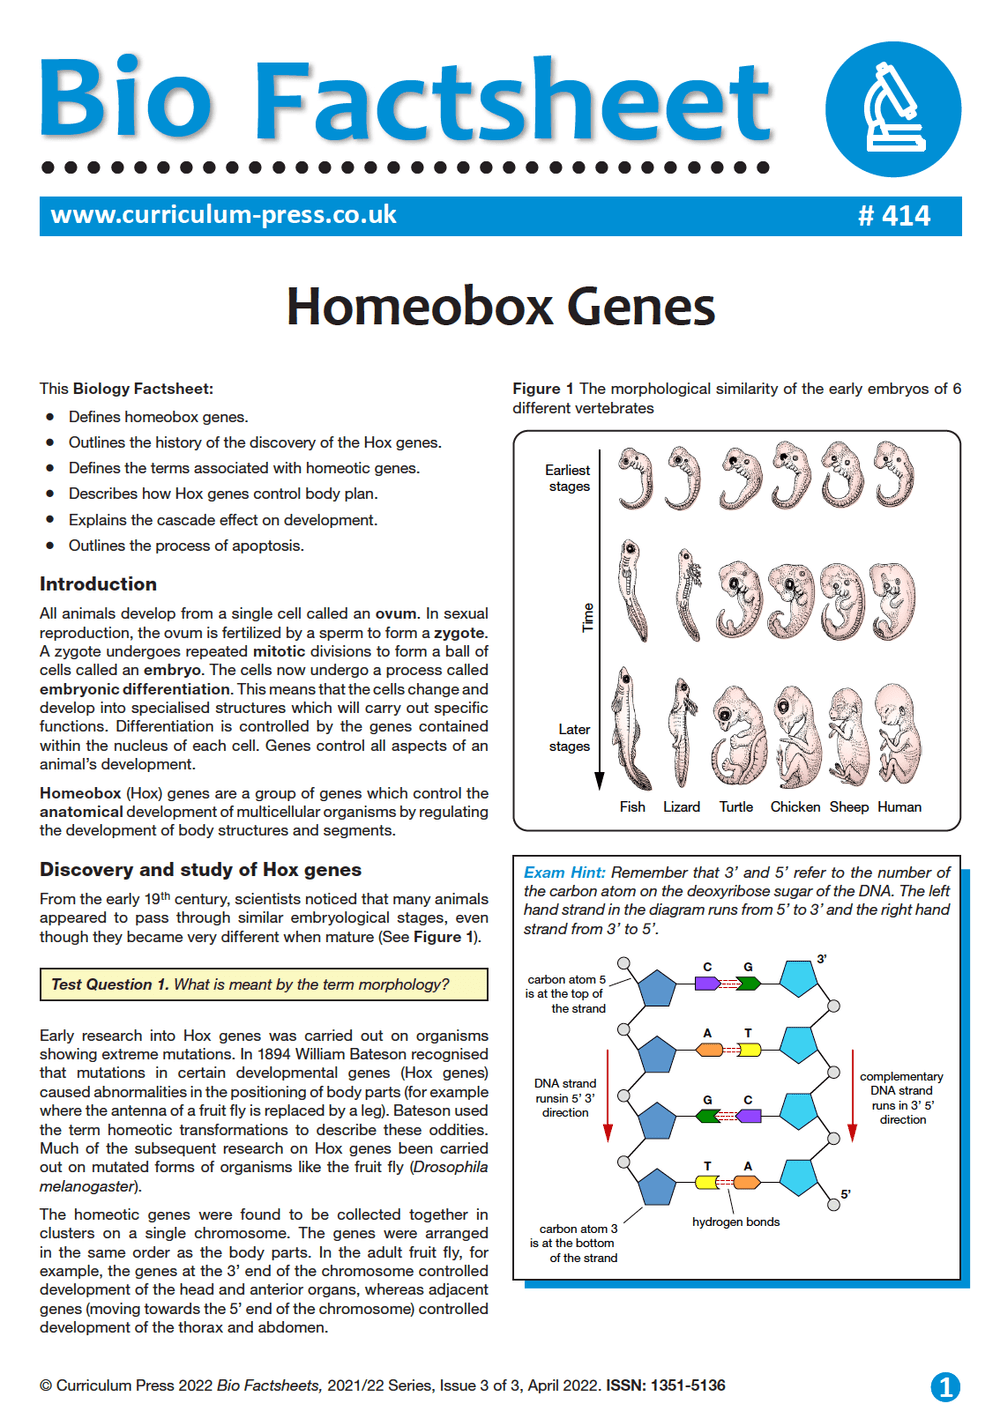 Homeobox Genes - Curriculum Press